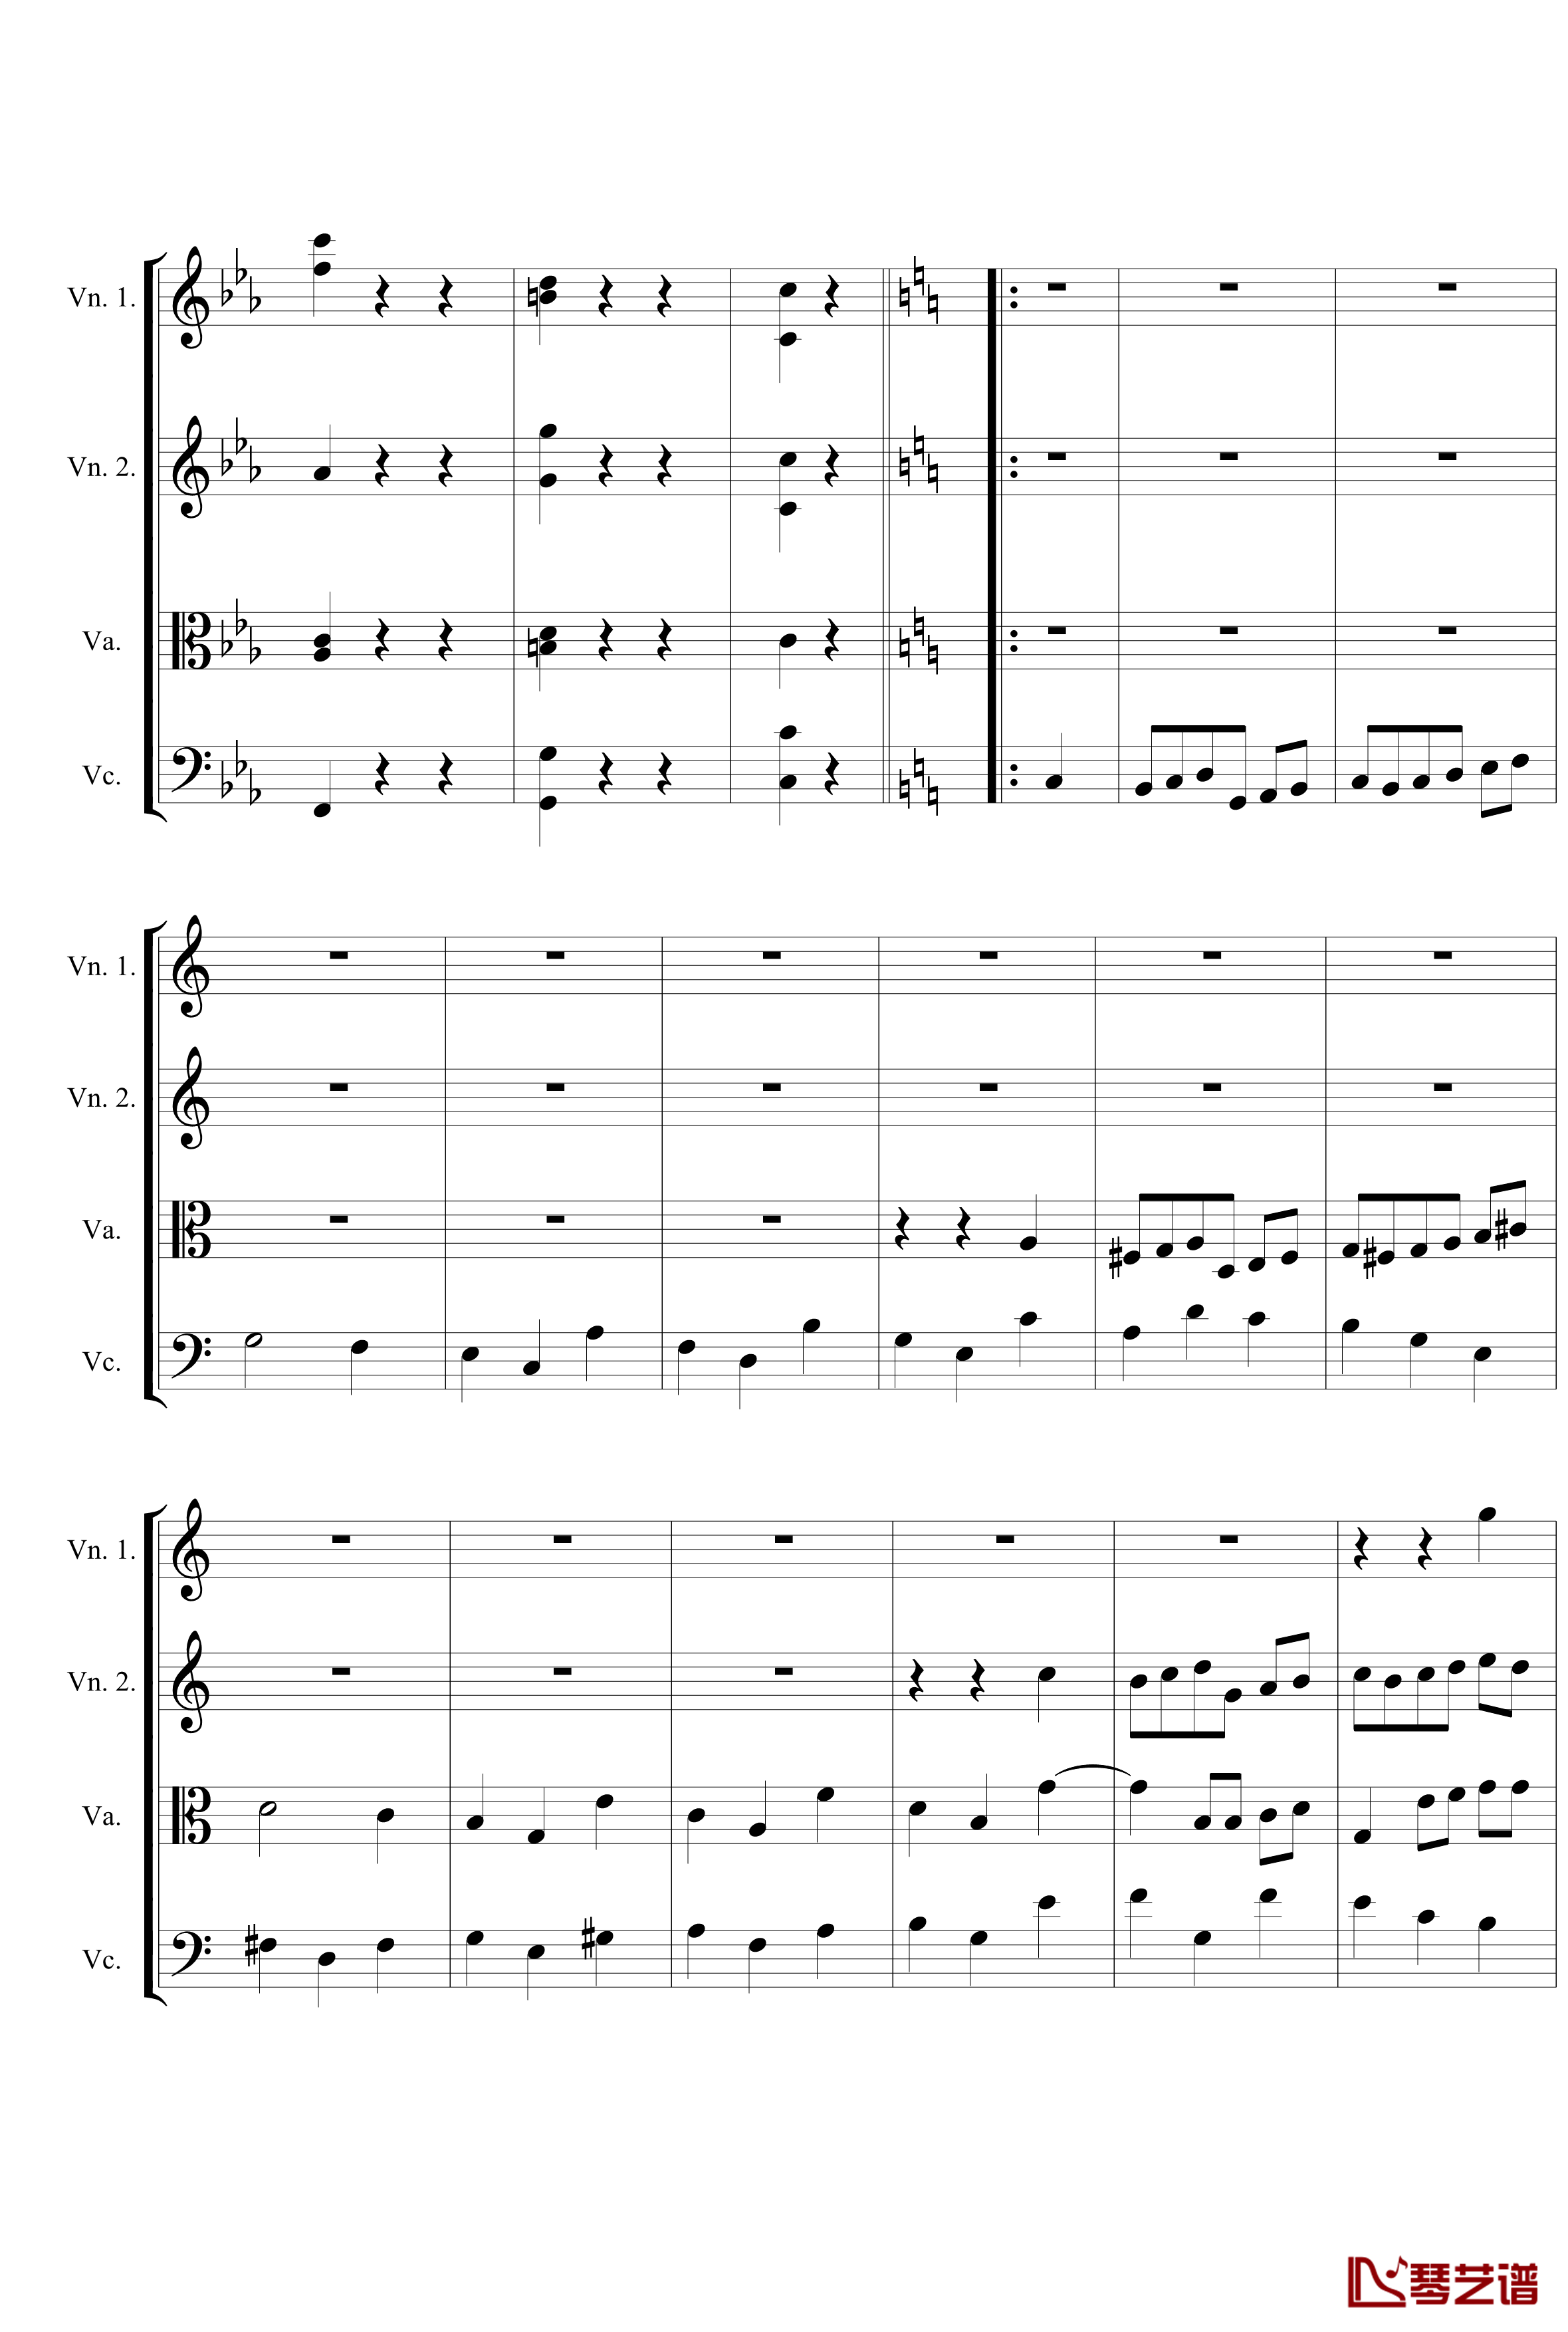 Symphony No.5 in C Minor 3rd钢琴谱-String quartet-贝多芬-beethoven11